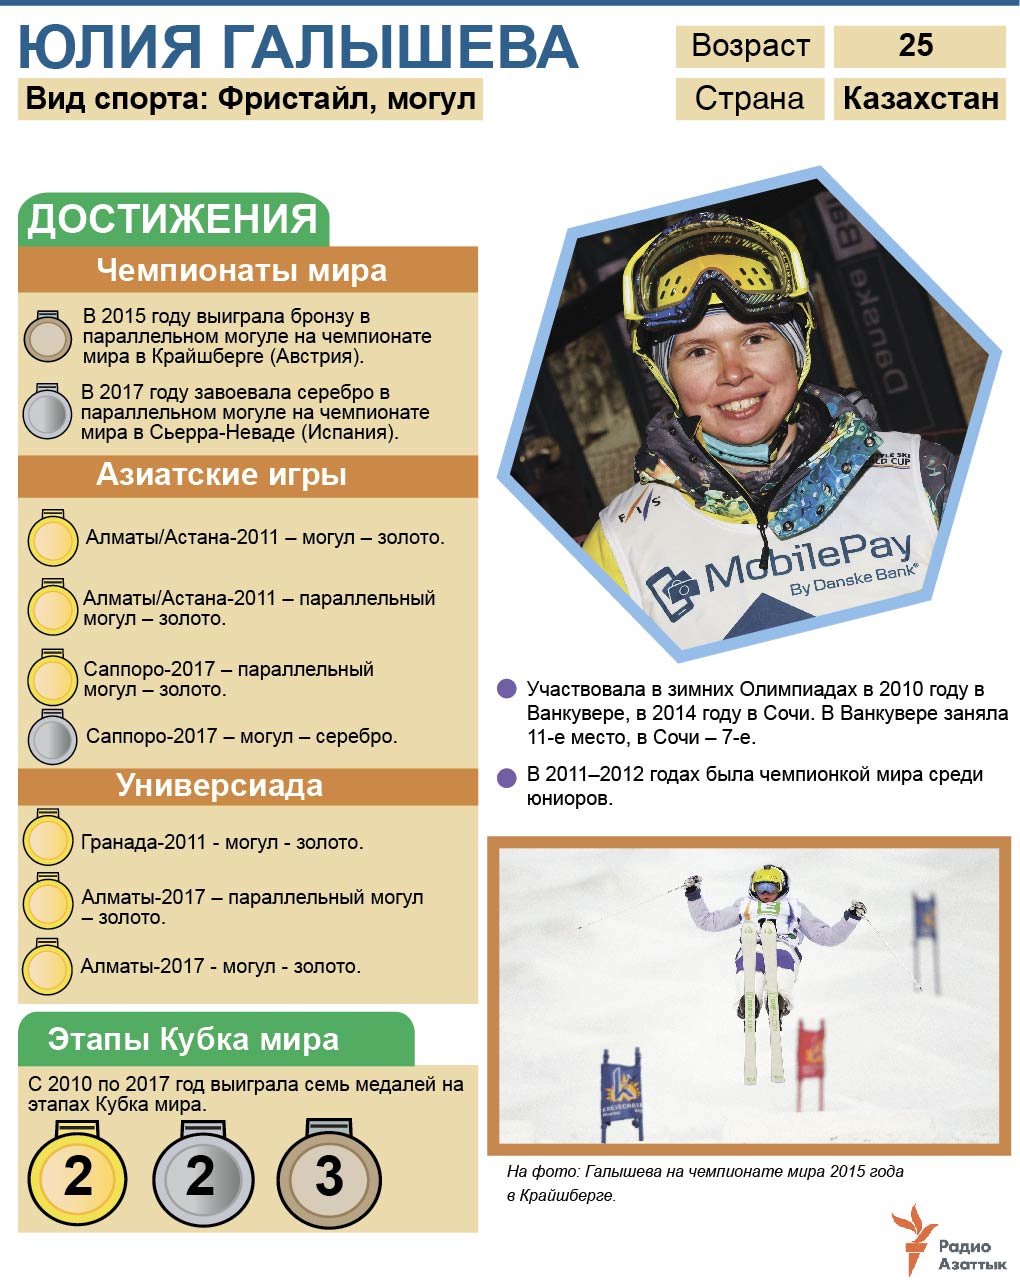 infographic about Yulia Galysheva